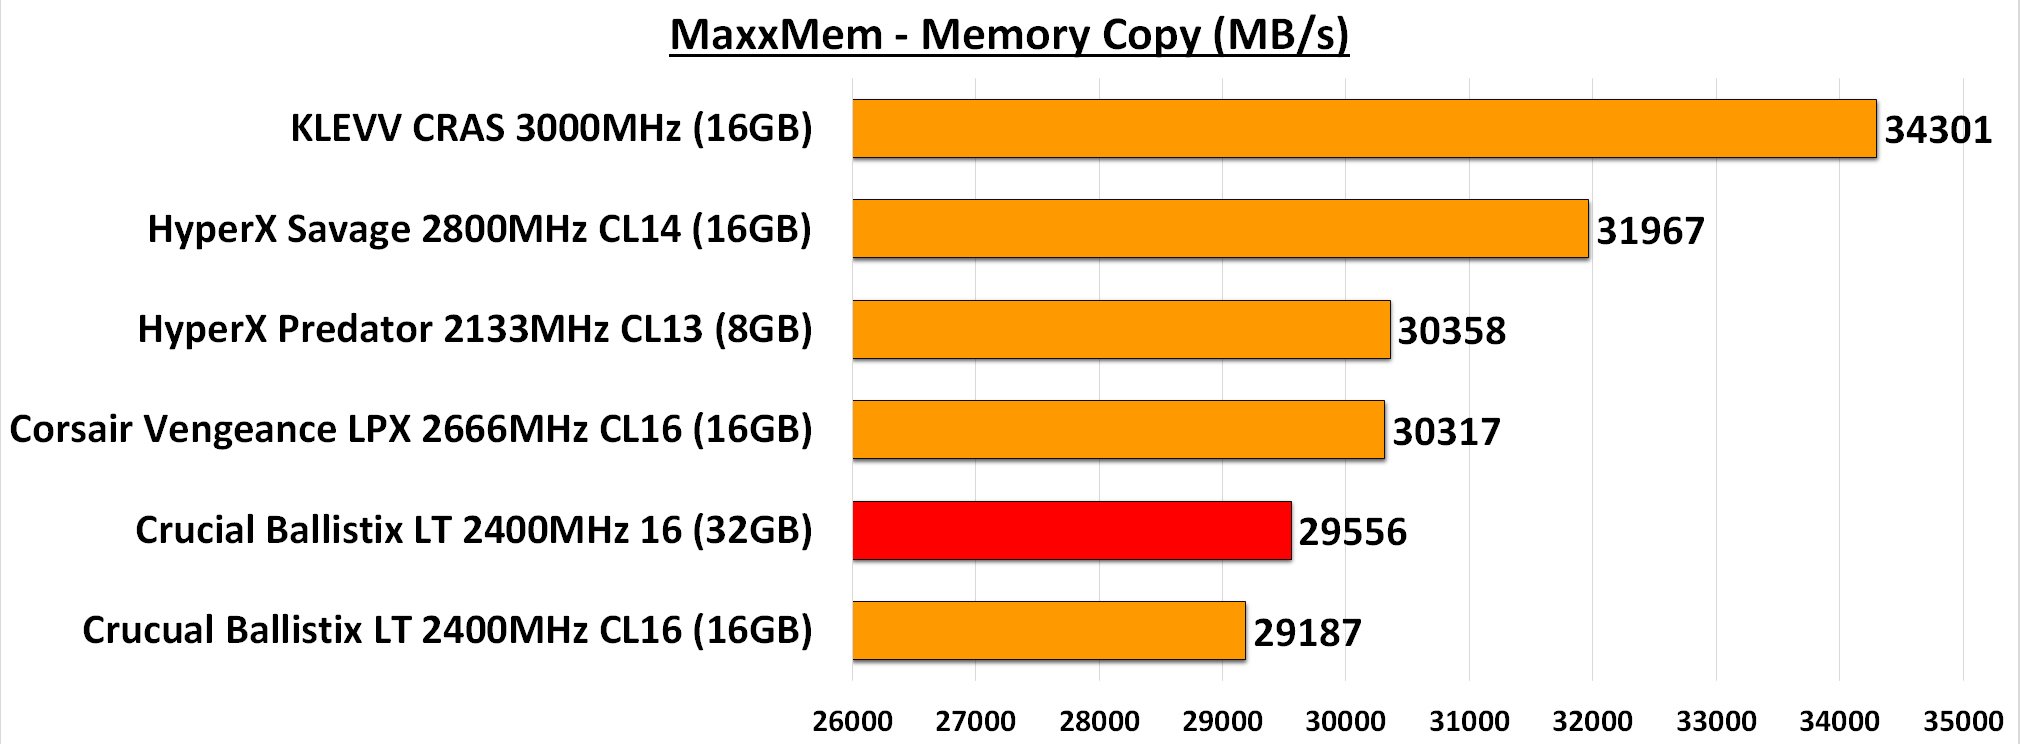 MaxxMem Memory Copy